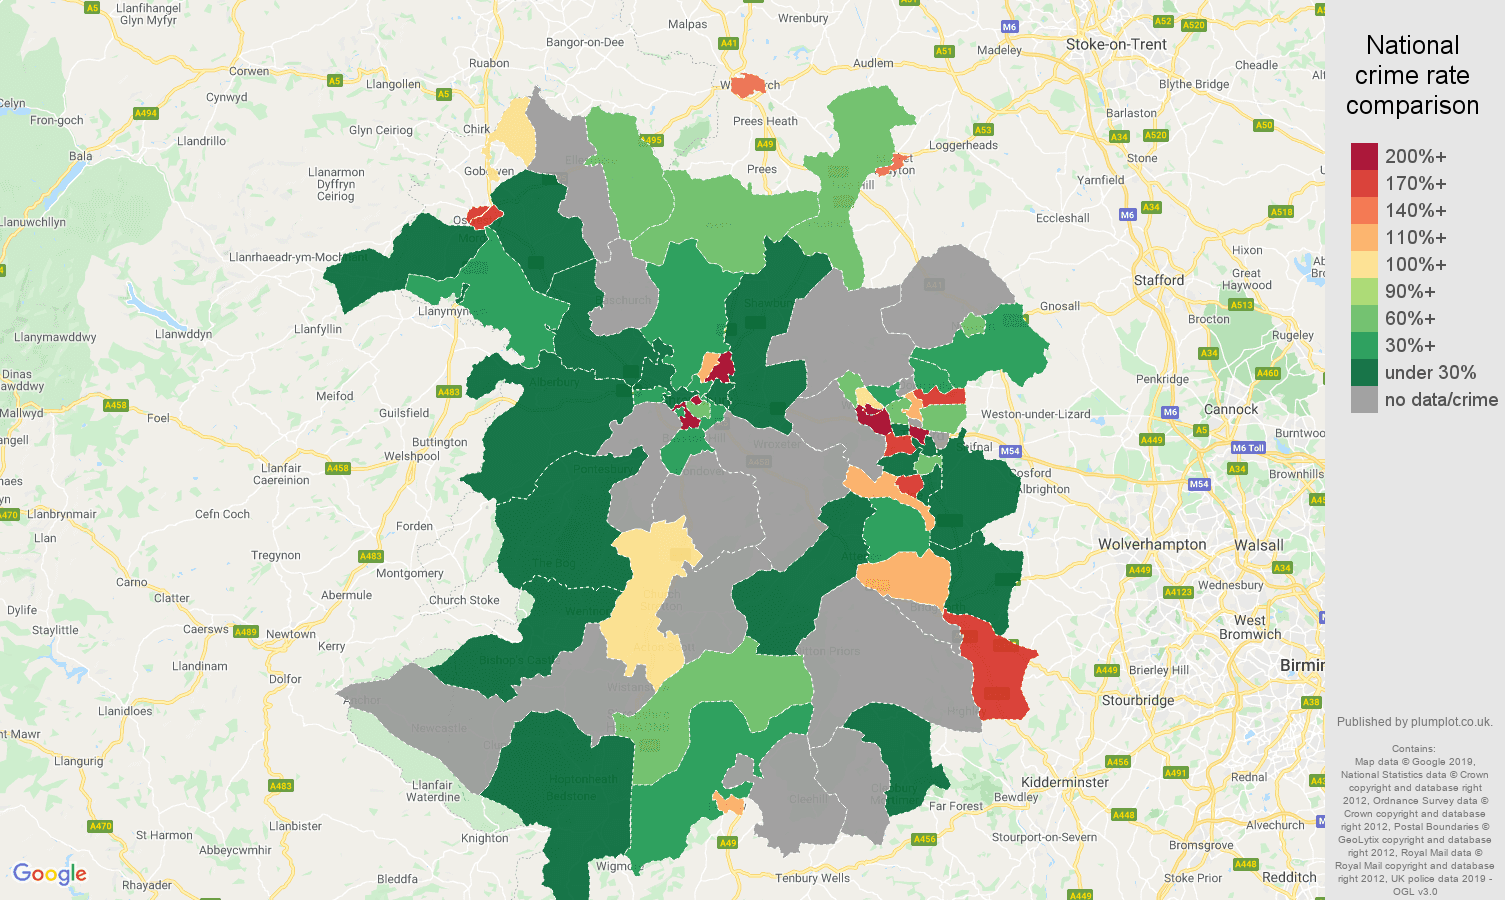 Shropshire shoplifting crime rate comparison map